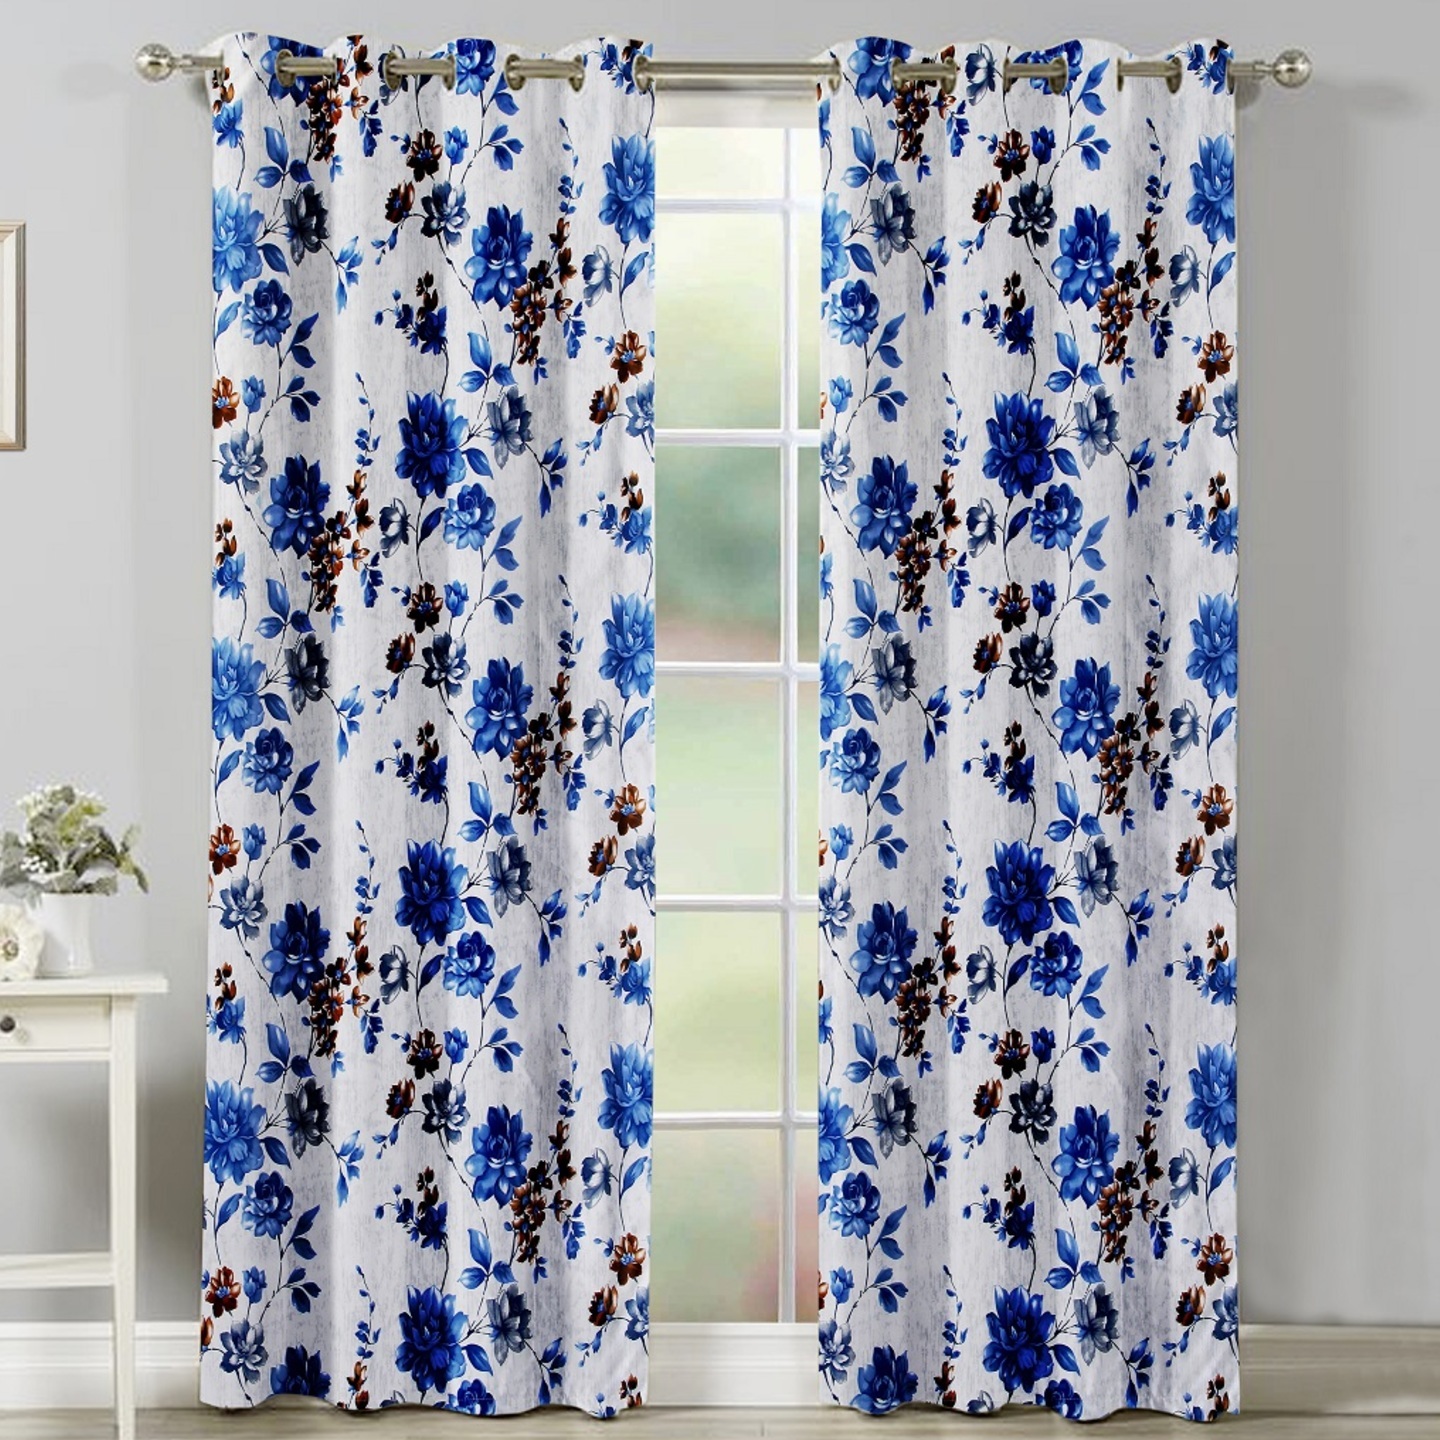 Handtex Home Floral Design Door Curtains 4x7 feet Set of 2 pcs Blue